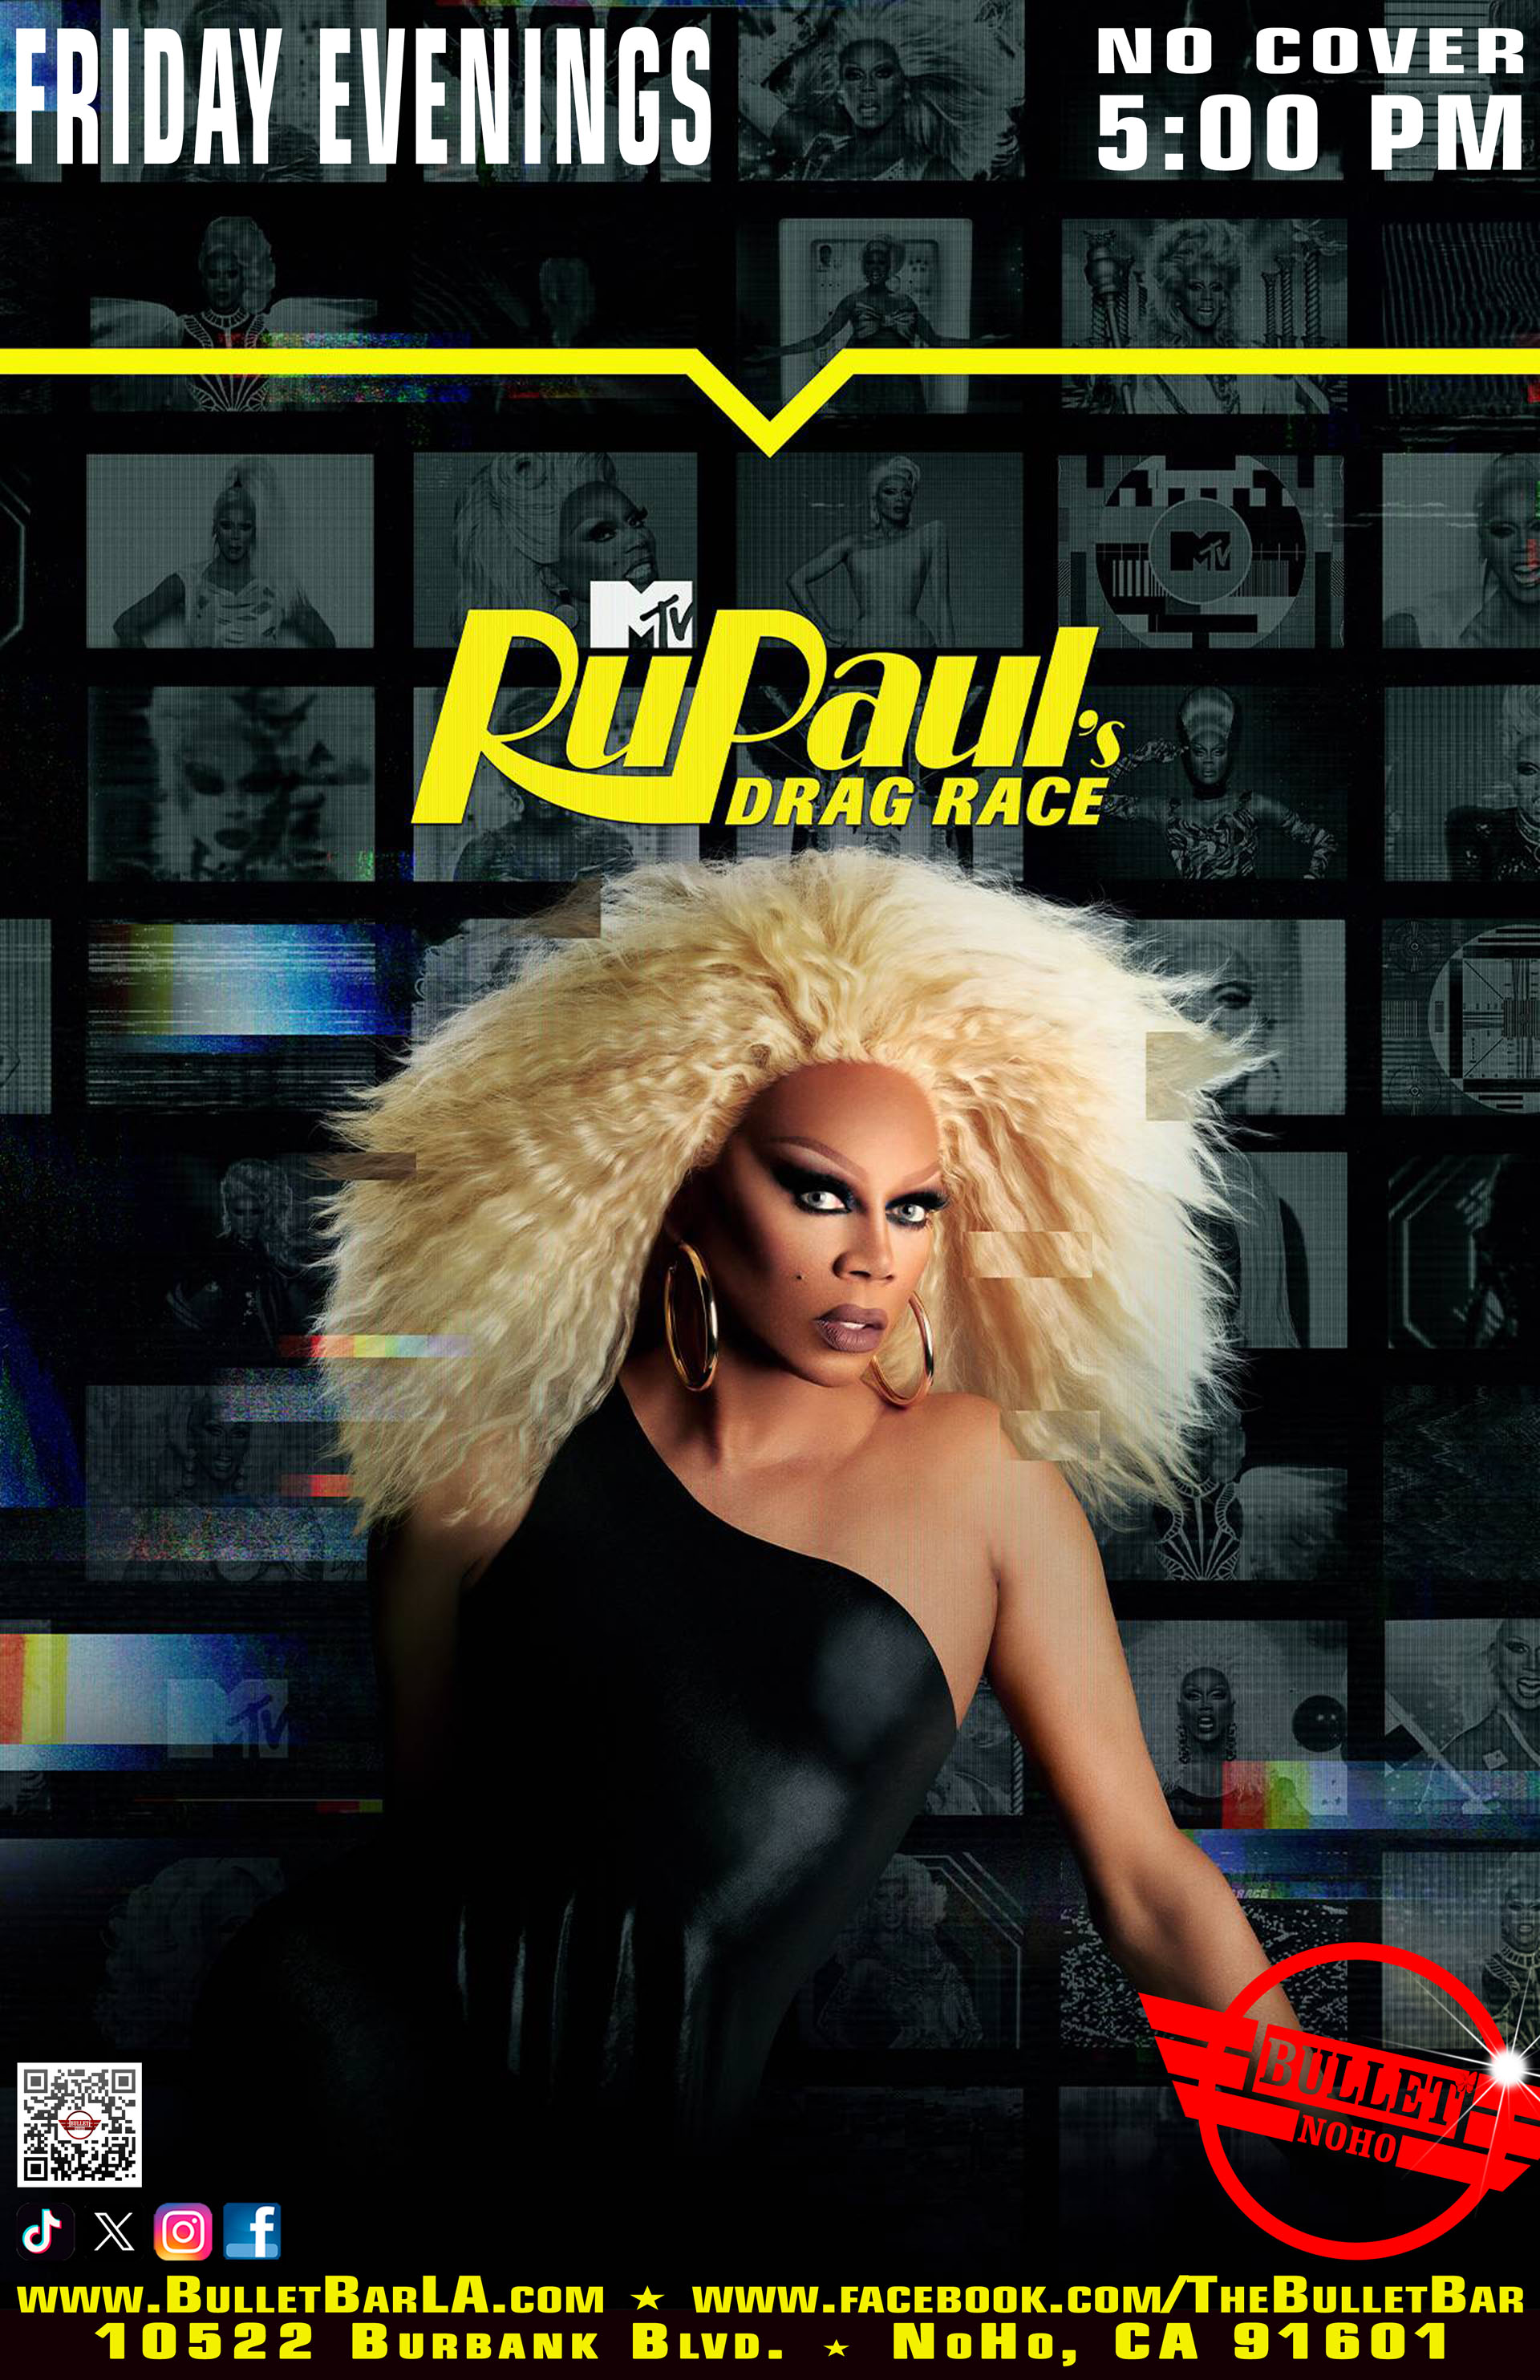 The Bullet Bar Presents RuPaul's Drag Race Season 16: Friday Evenings at 5:00 PM! No cover.